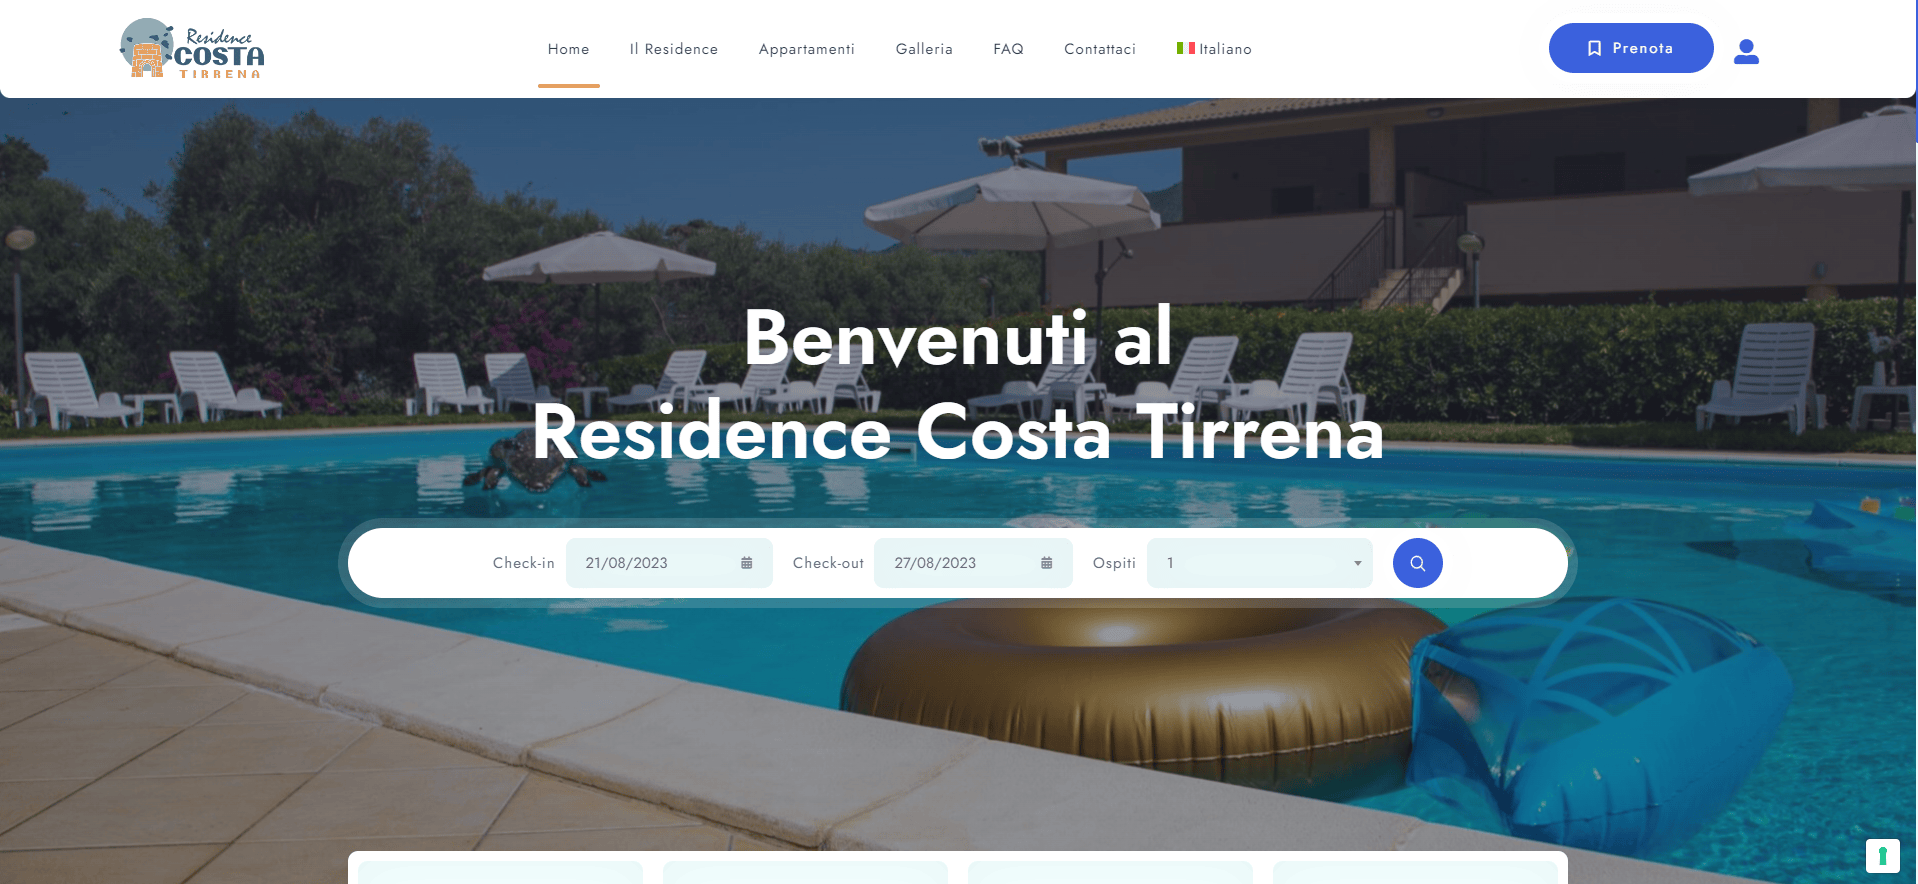 Residence Costa Tirrena